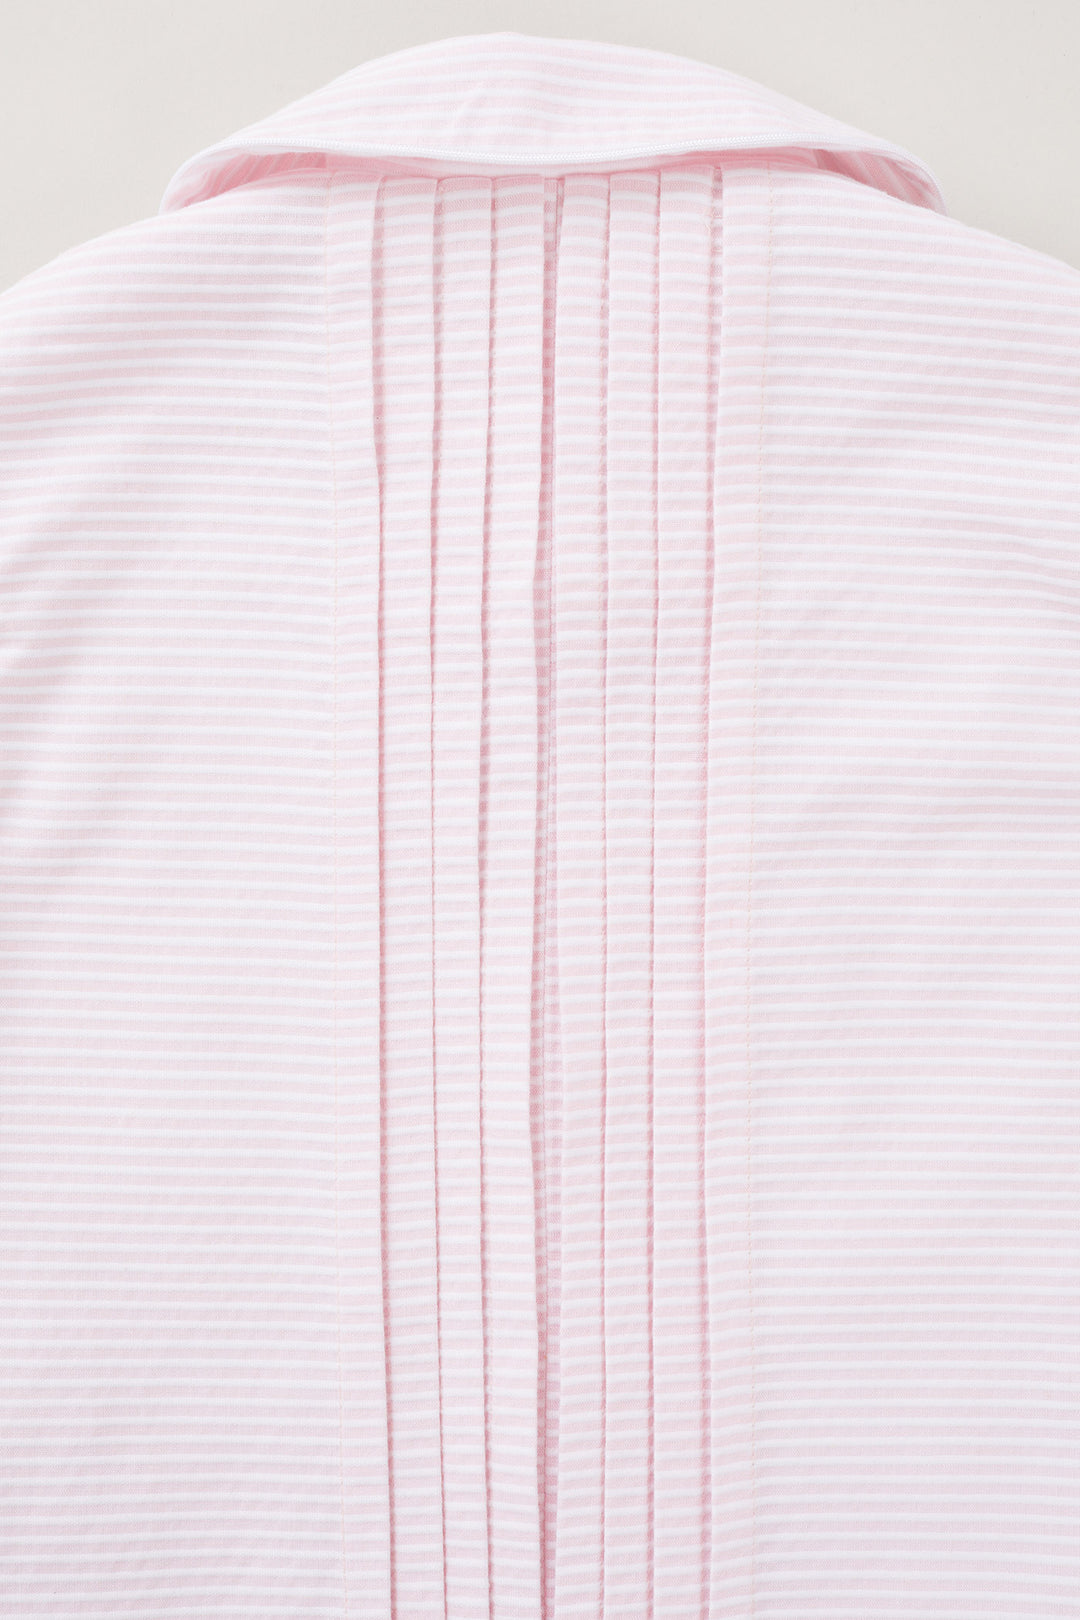 Pretzel Dress in Pink Stripes